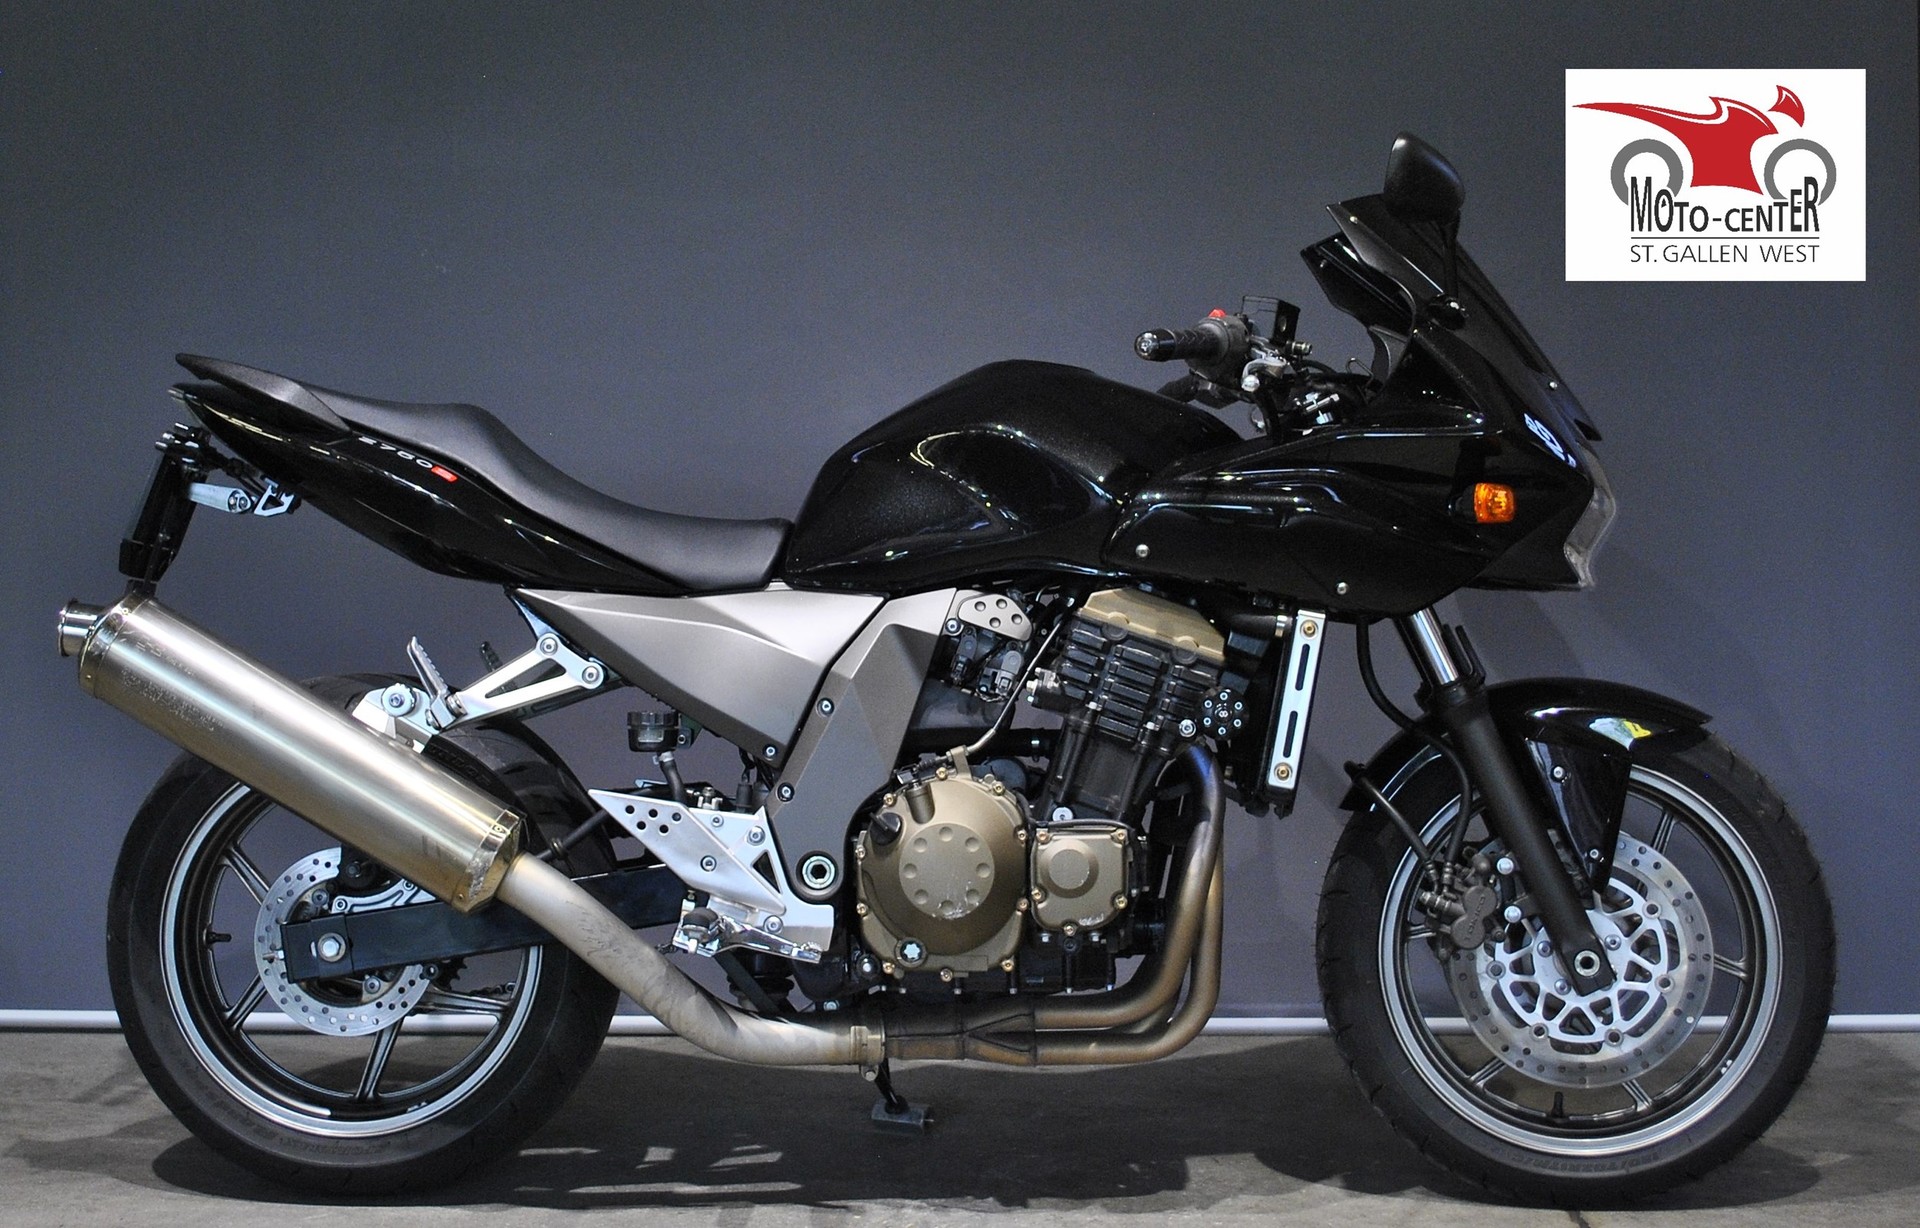 Kawasaki Z750 - über 35 kW - Moto Center Winterthur